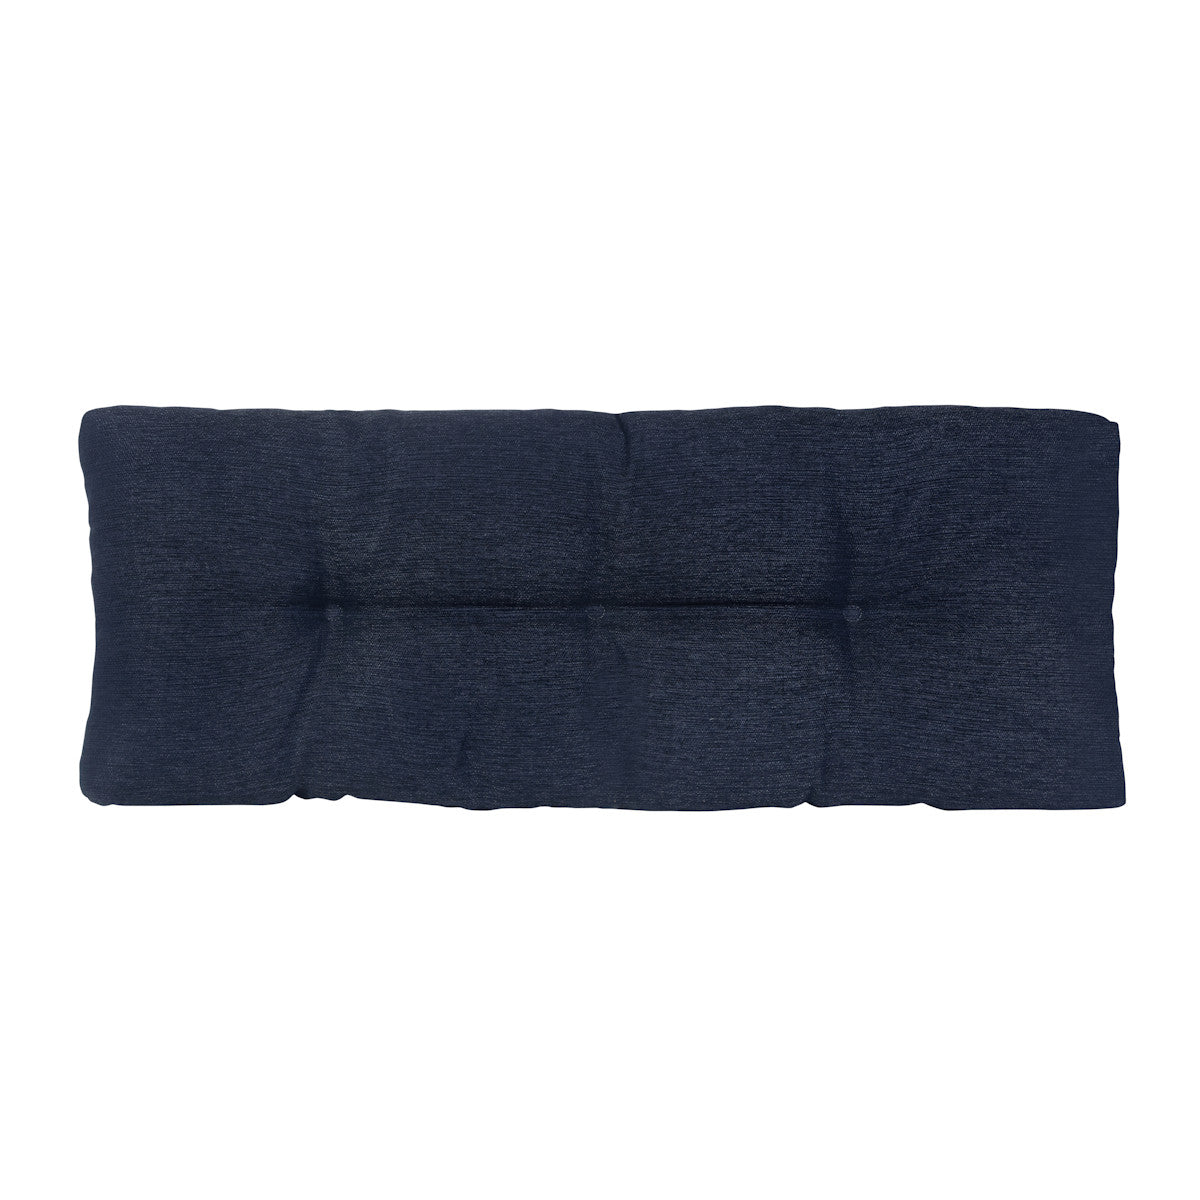 Omega Gripper Bench Cushion